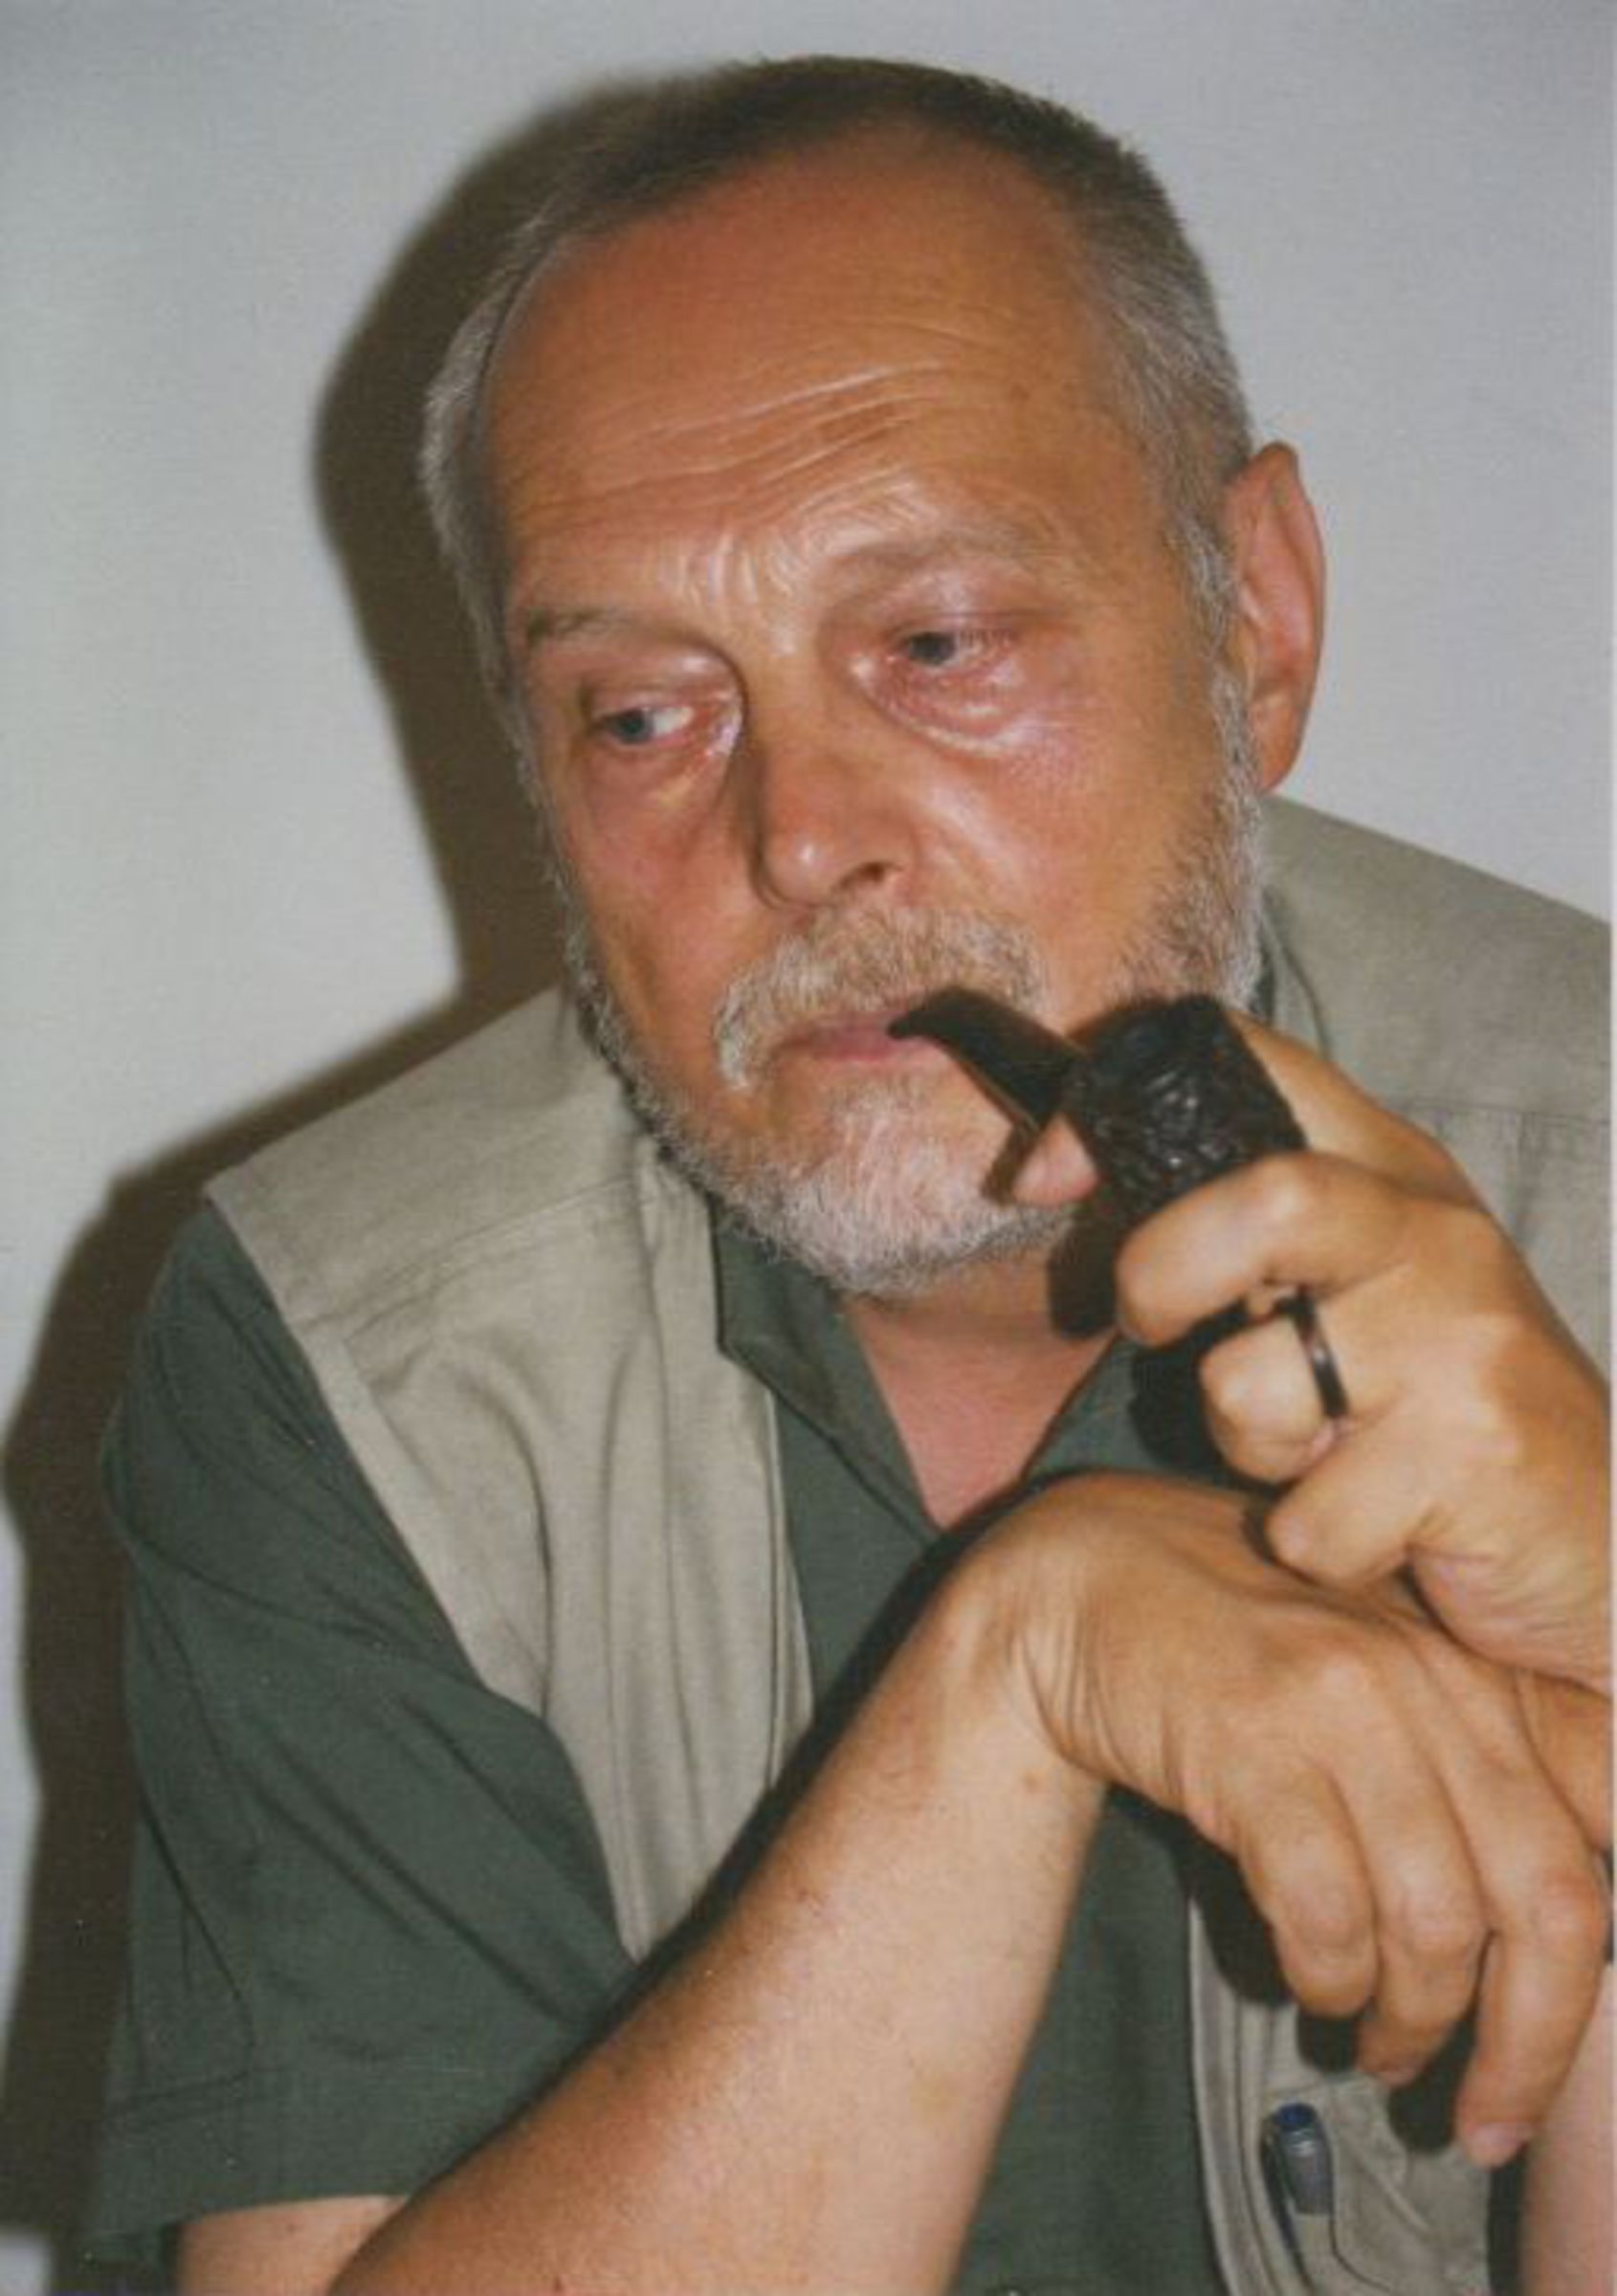 Kamil Kalina with his pipe